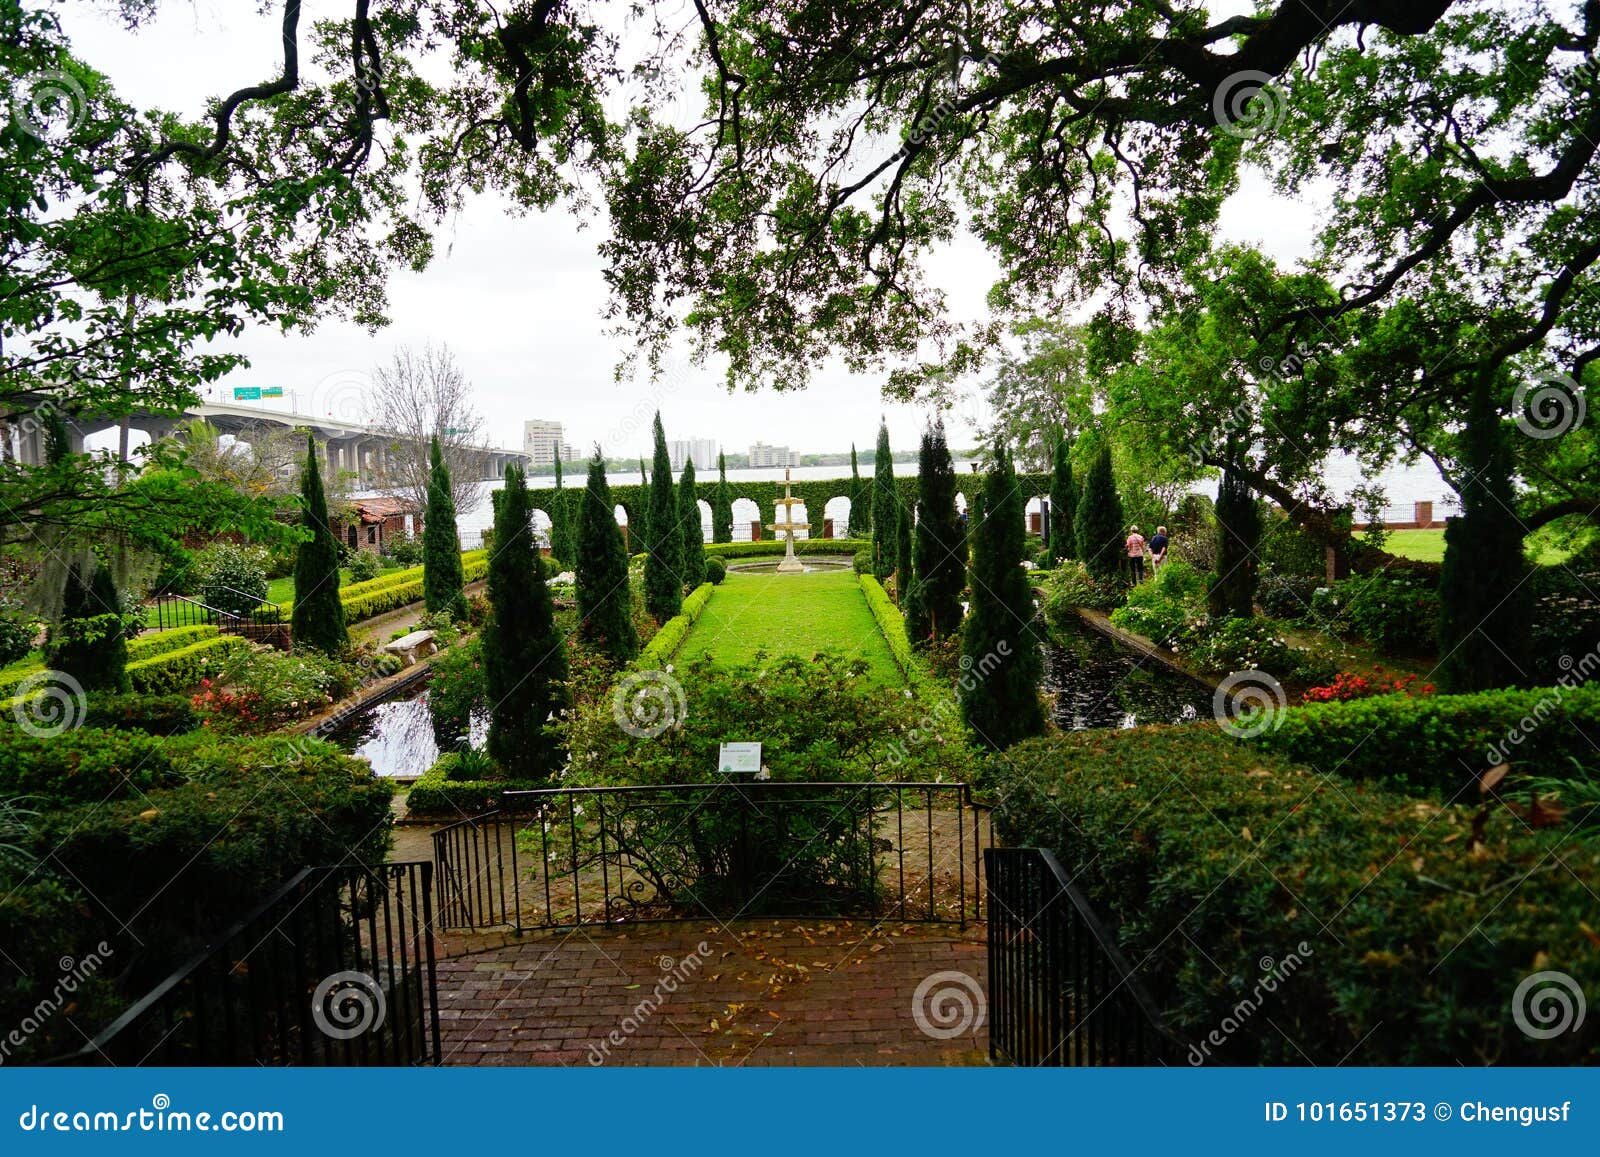 Garden Of Museum In Jacksonville Florida Stock Image Image Of